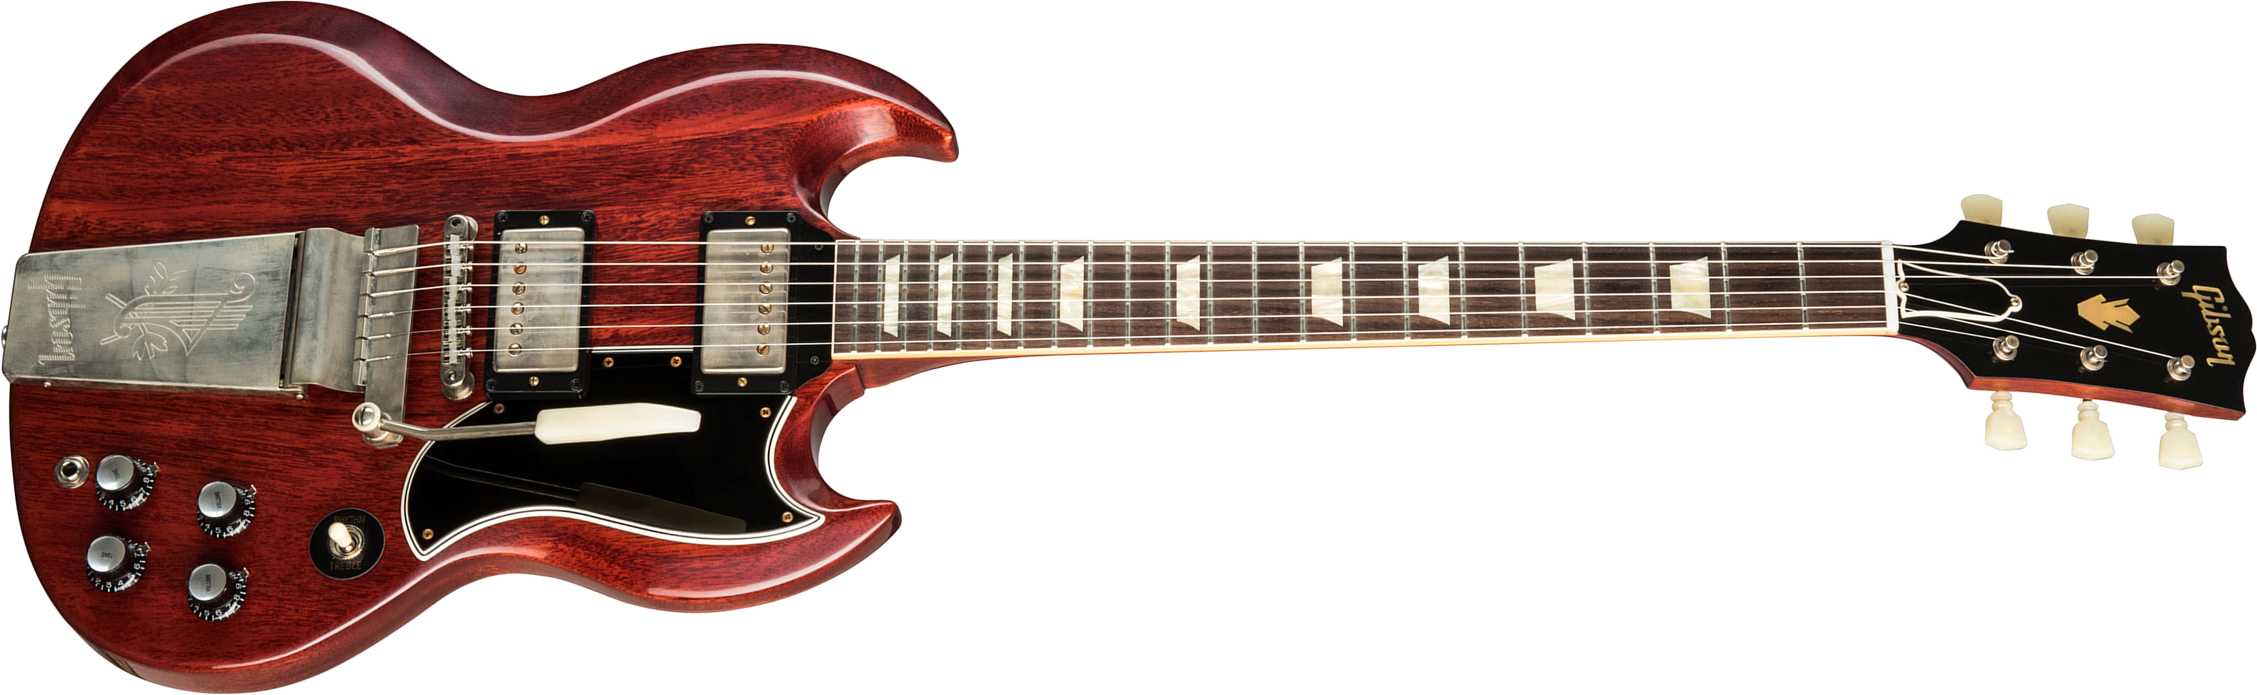 Gibson Custom Shop Sg Standard 1964 Reissue Maestro Vibrola 2019 2h Trem Rw - Vos Cherry Red - Guitare Électrique Double Cut - Main picture